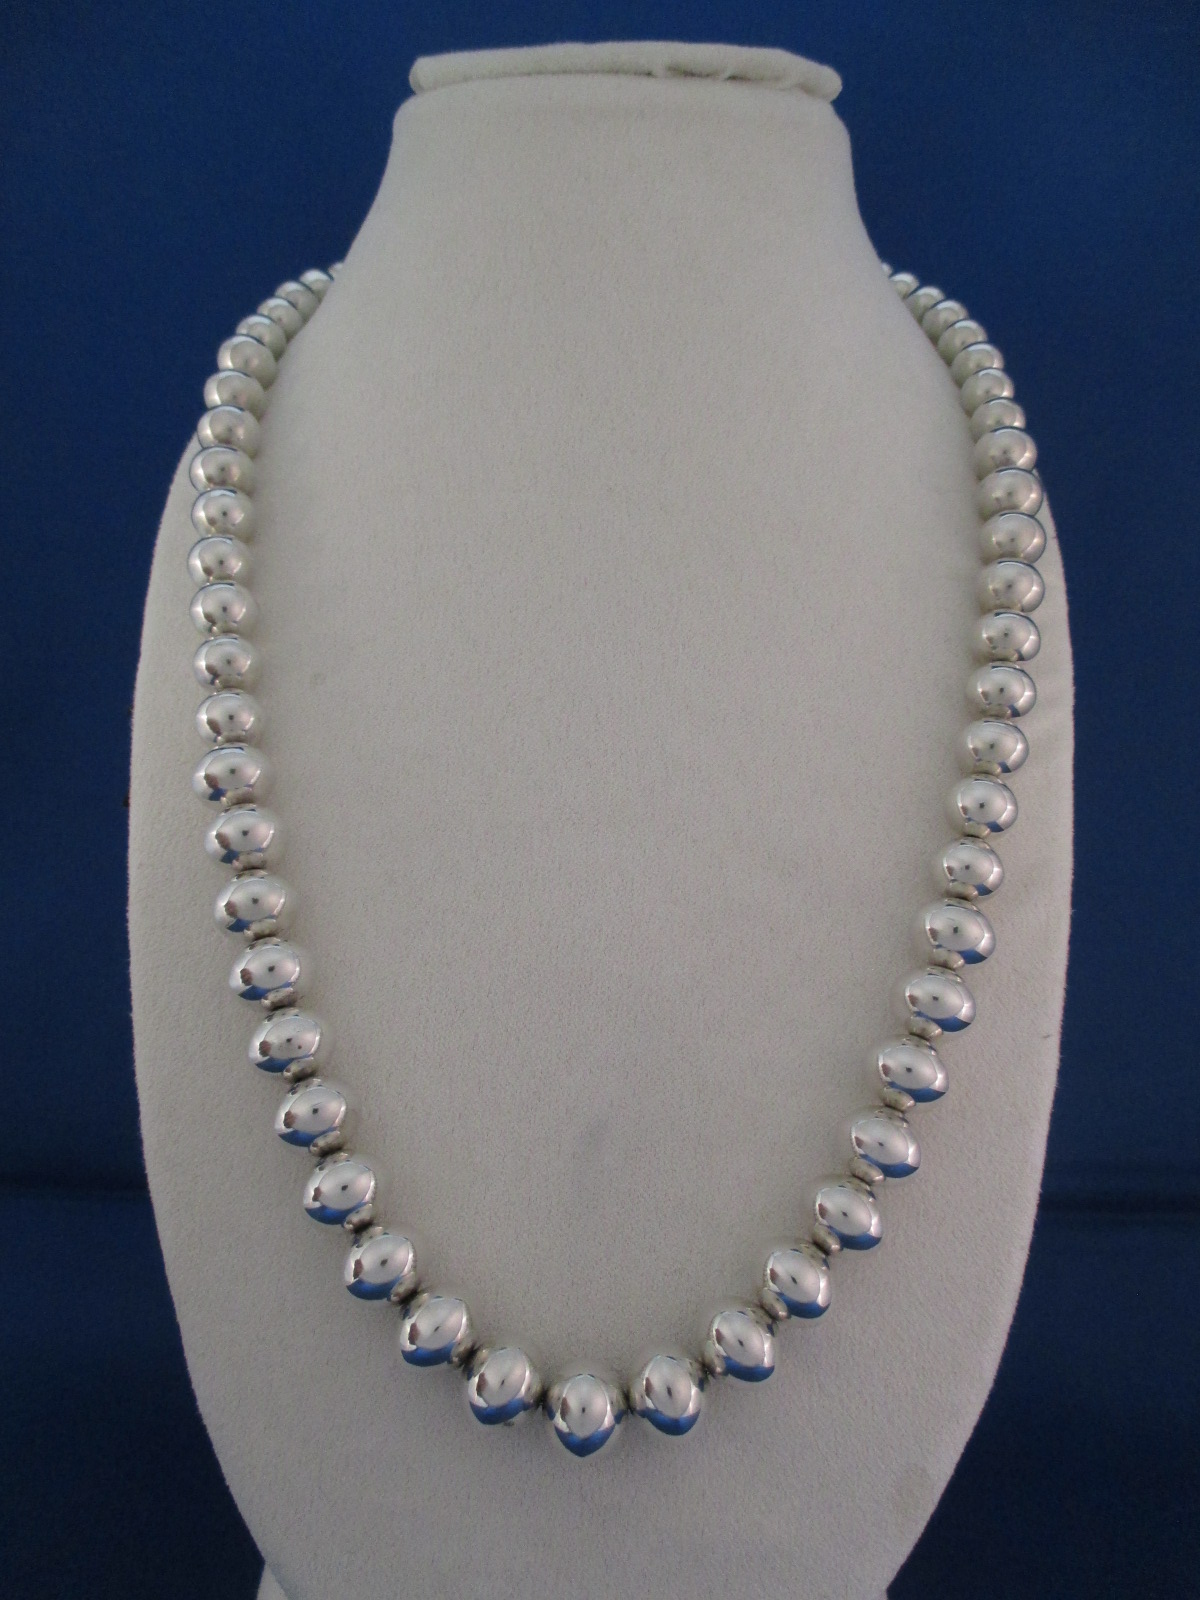 Longer Sterling Silver Bead Necklace by Navajo jewelry artists, Gene & Martha Jackson $625-